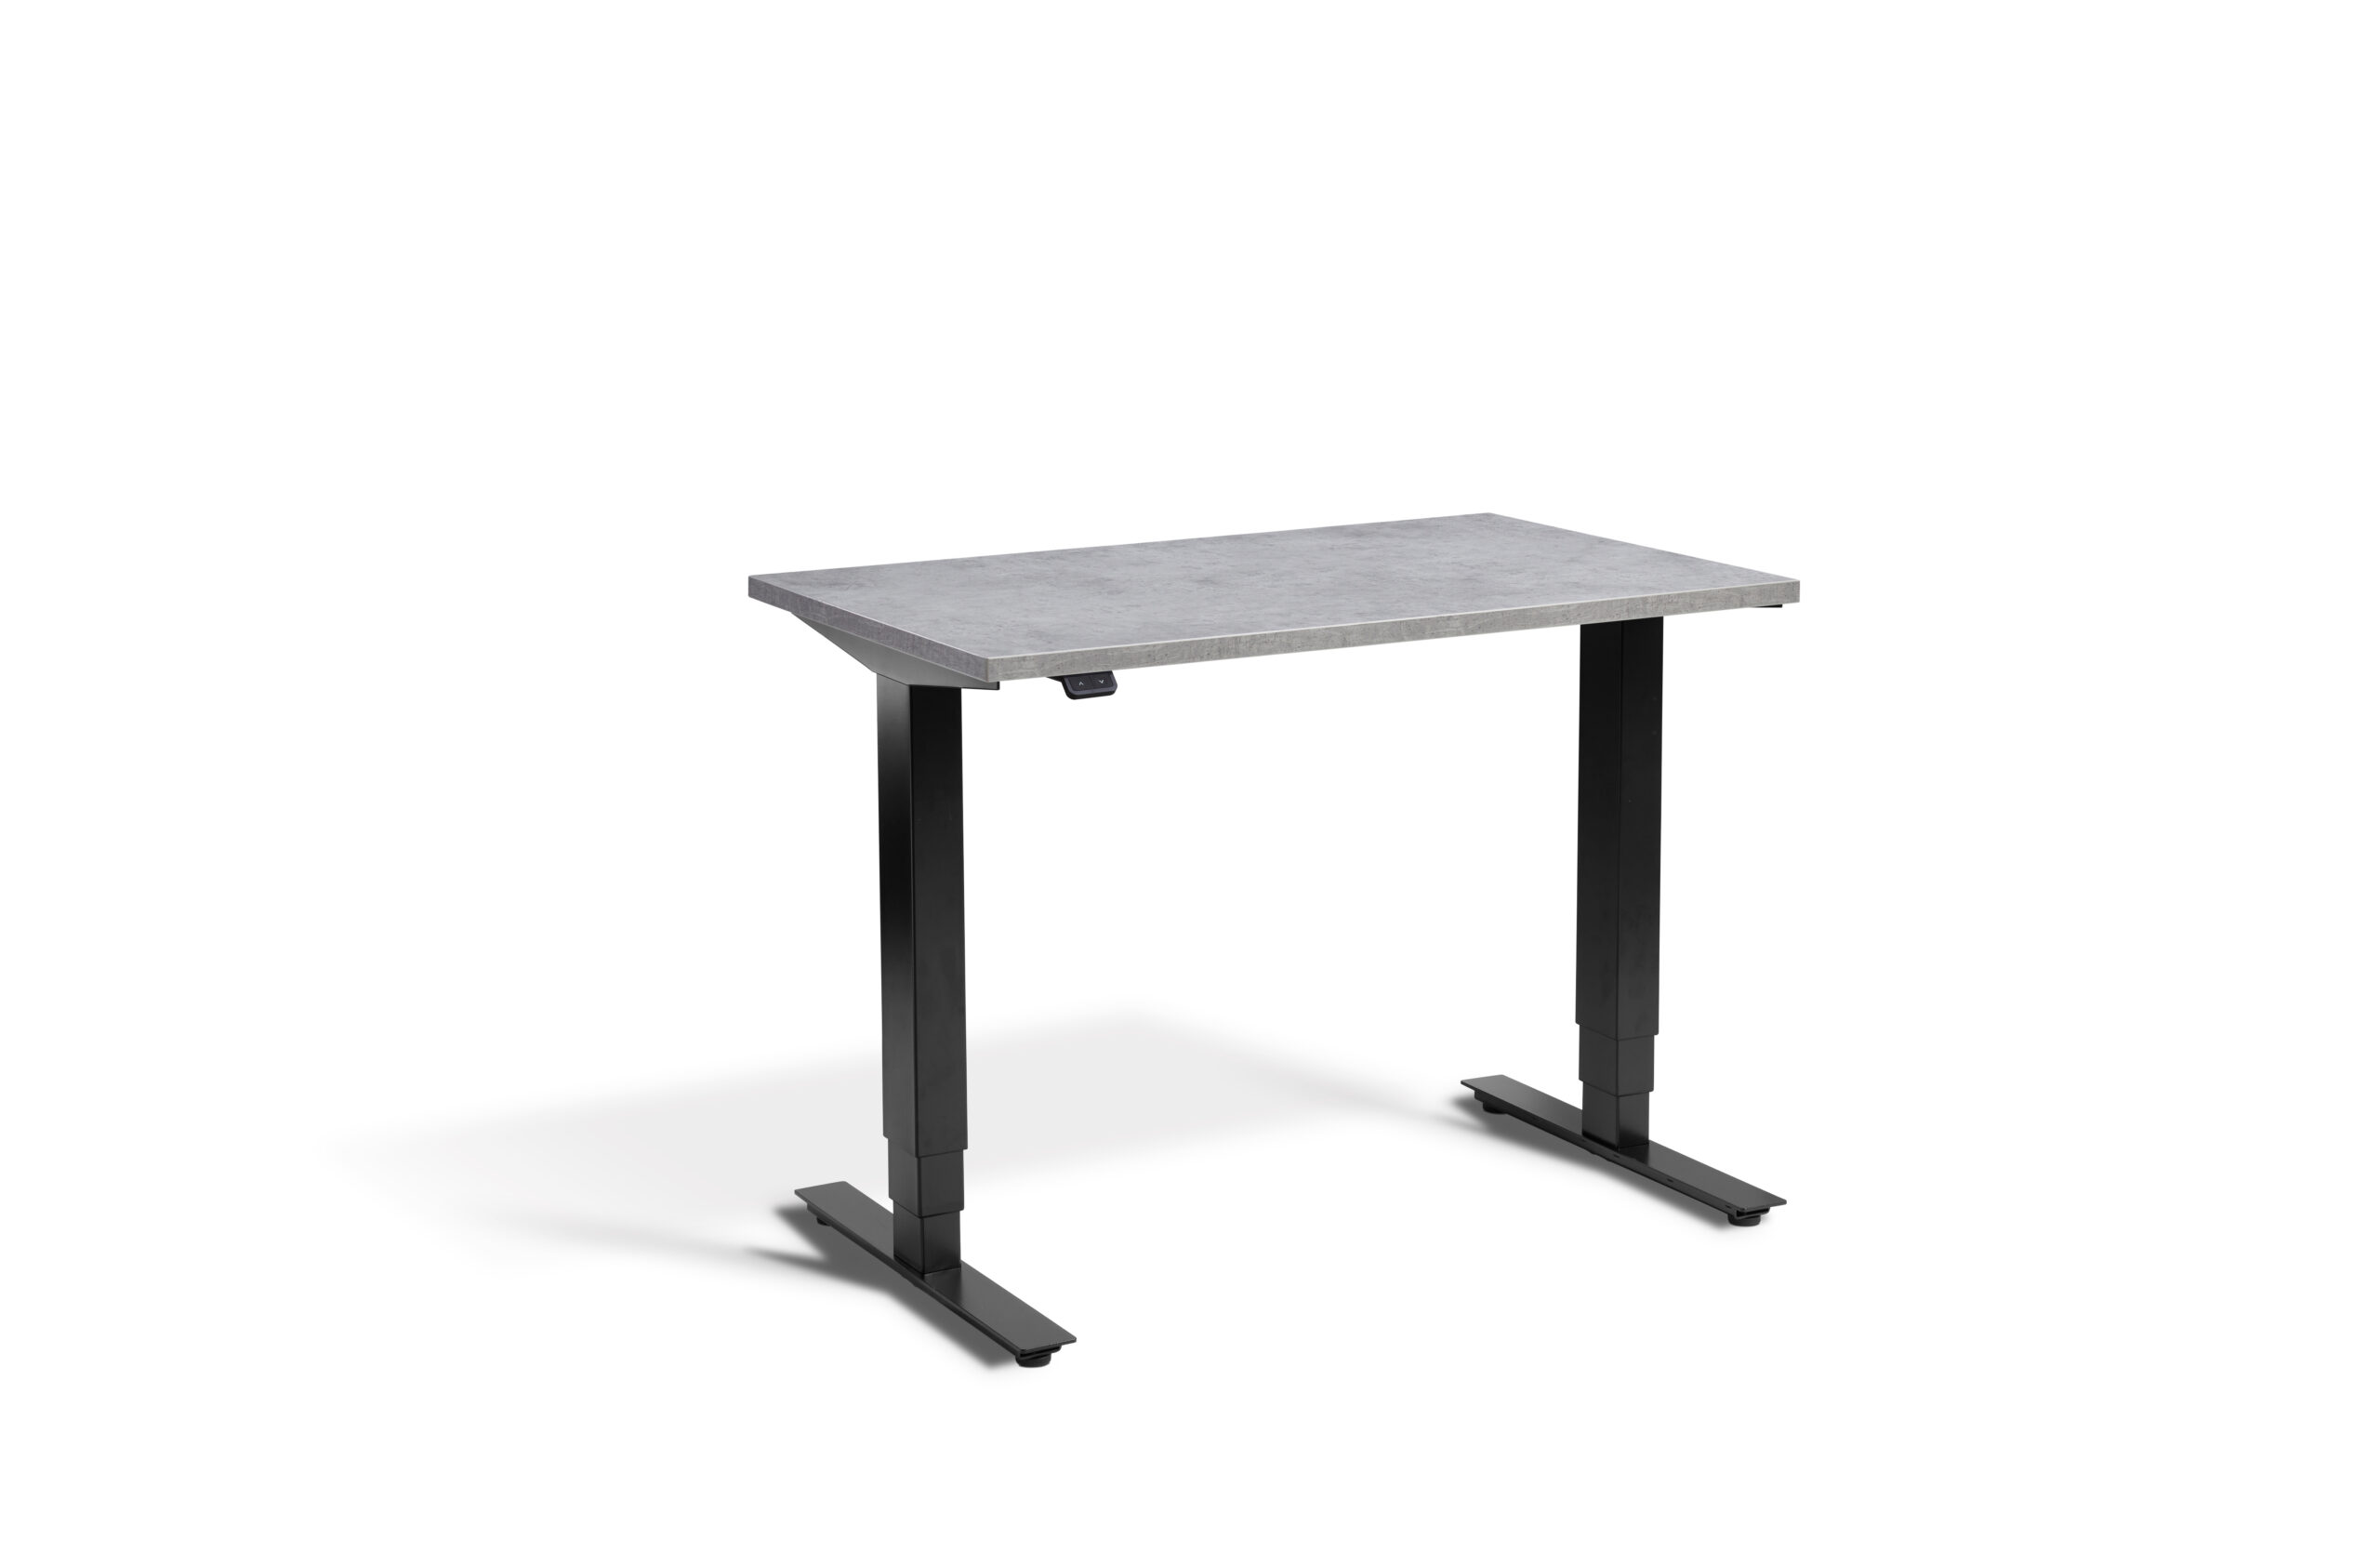 The Mini Desk - Black Frame - Height Adjustable Desk By Lavoro Design